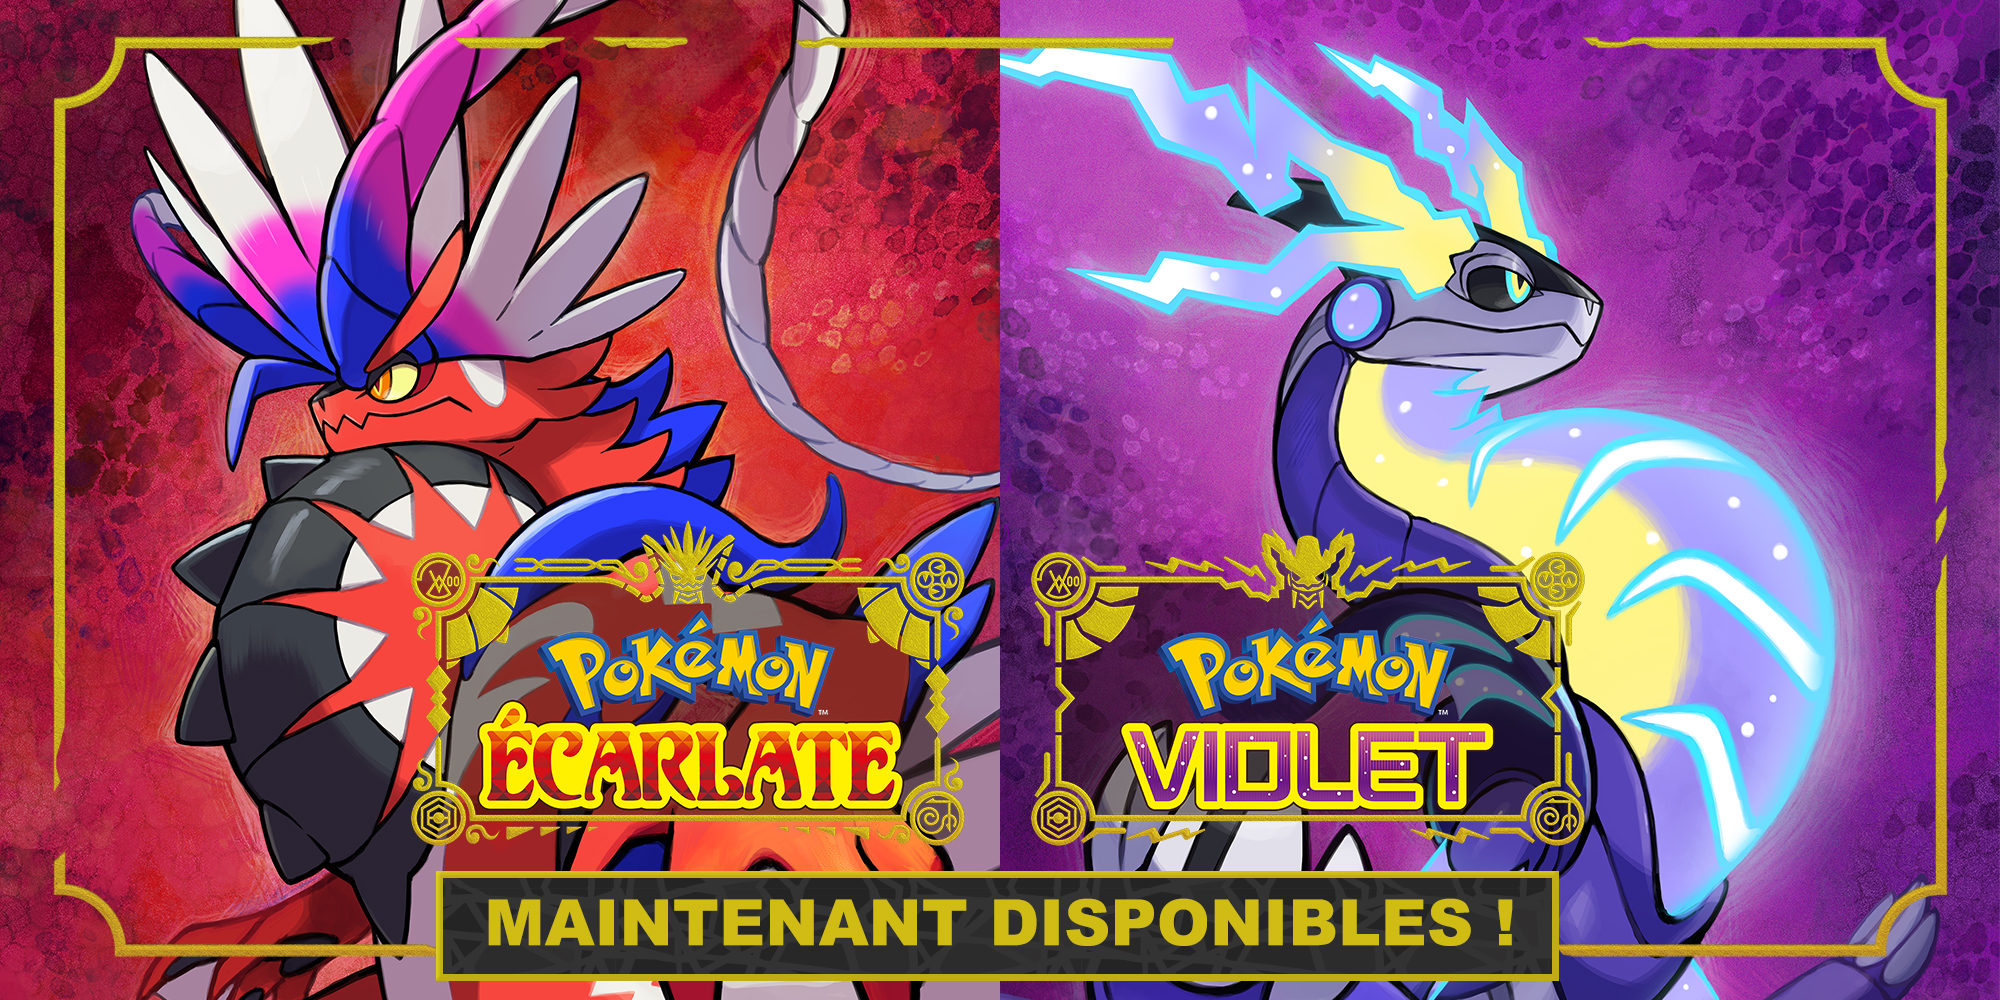 Pokémon Écarlate & Pokémon Violet